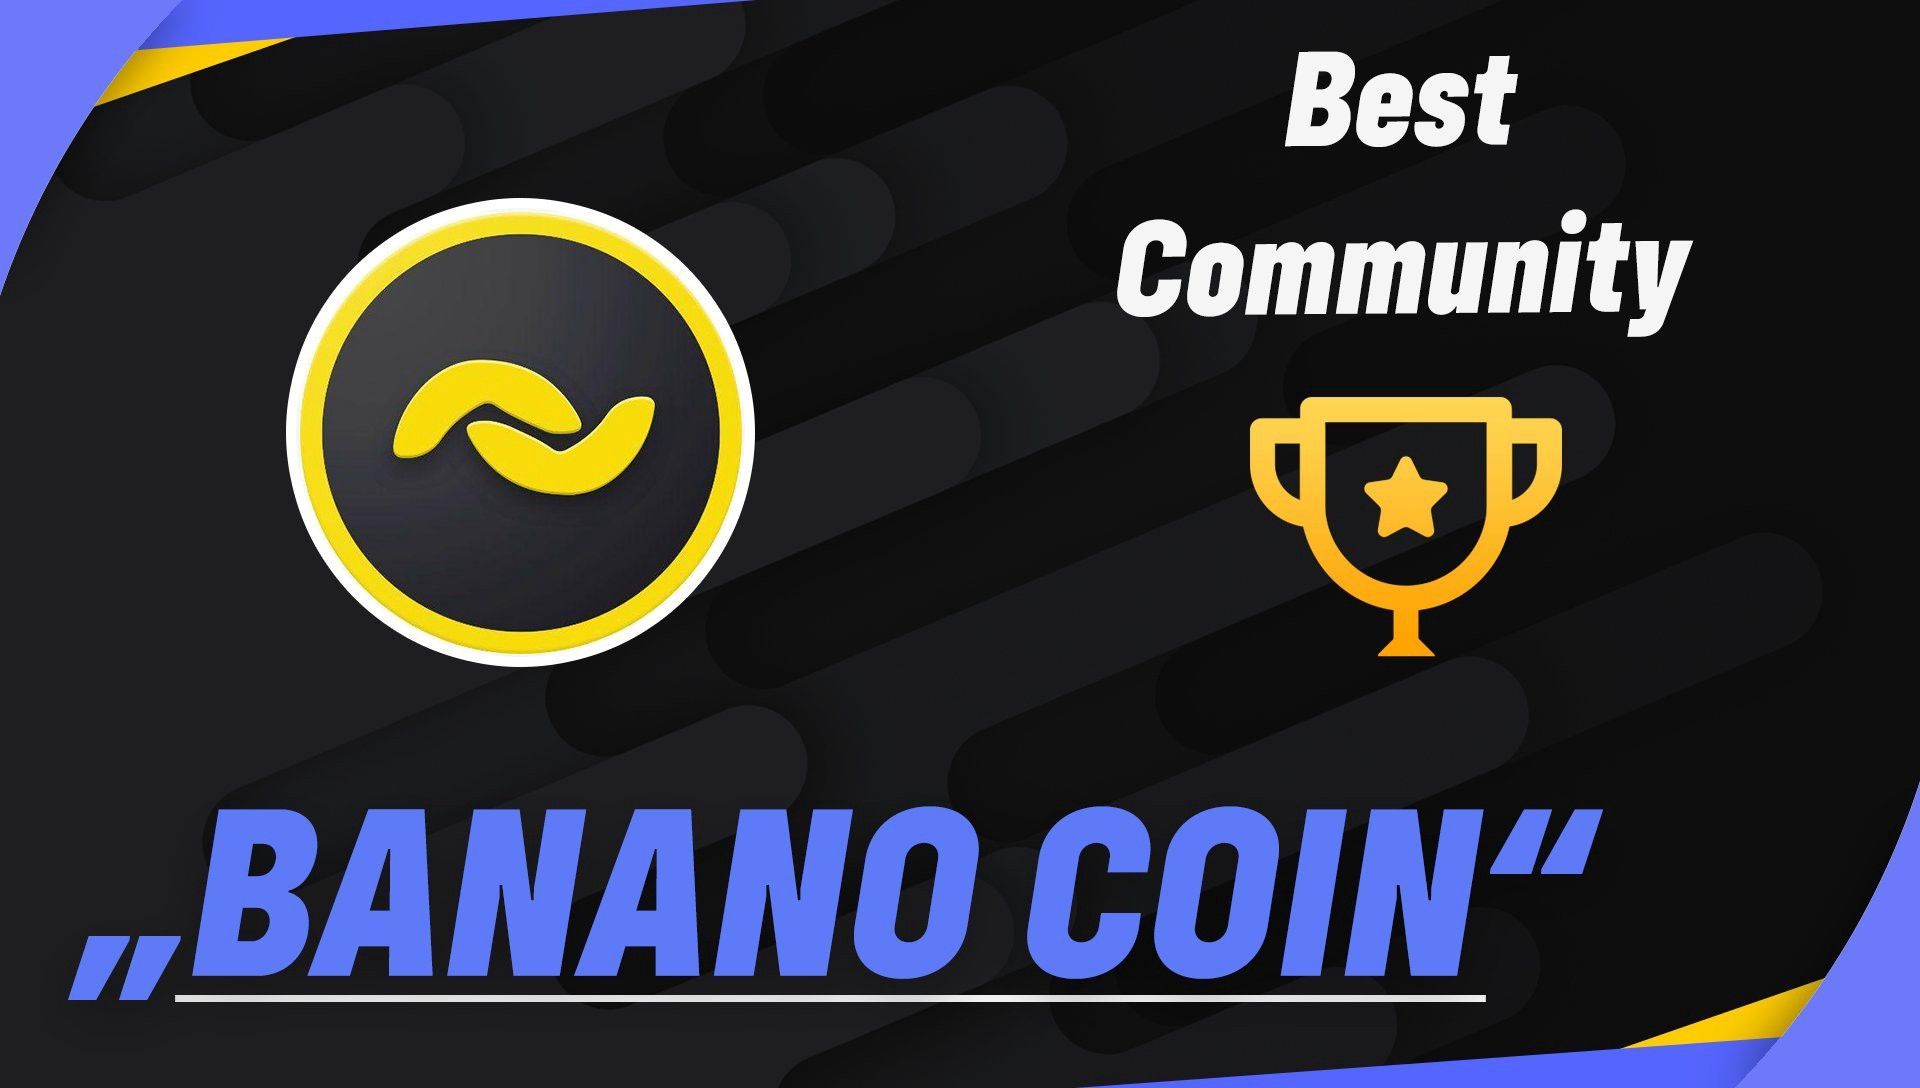 BANANO Wins ‘Best Community’ Award at the ‘Blockchain Awards’